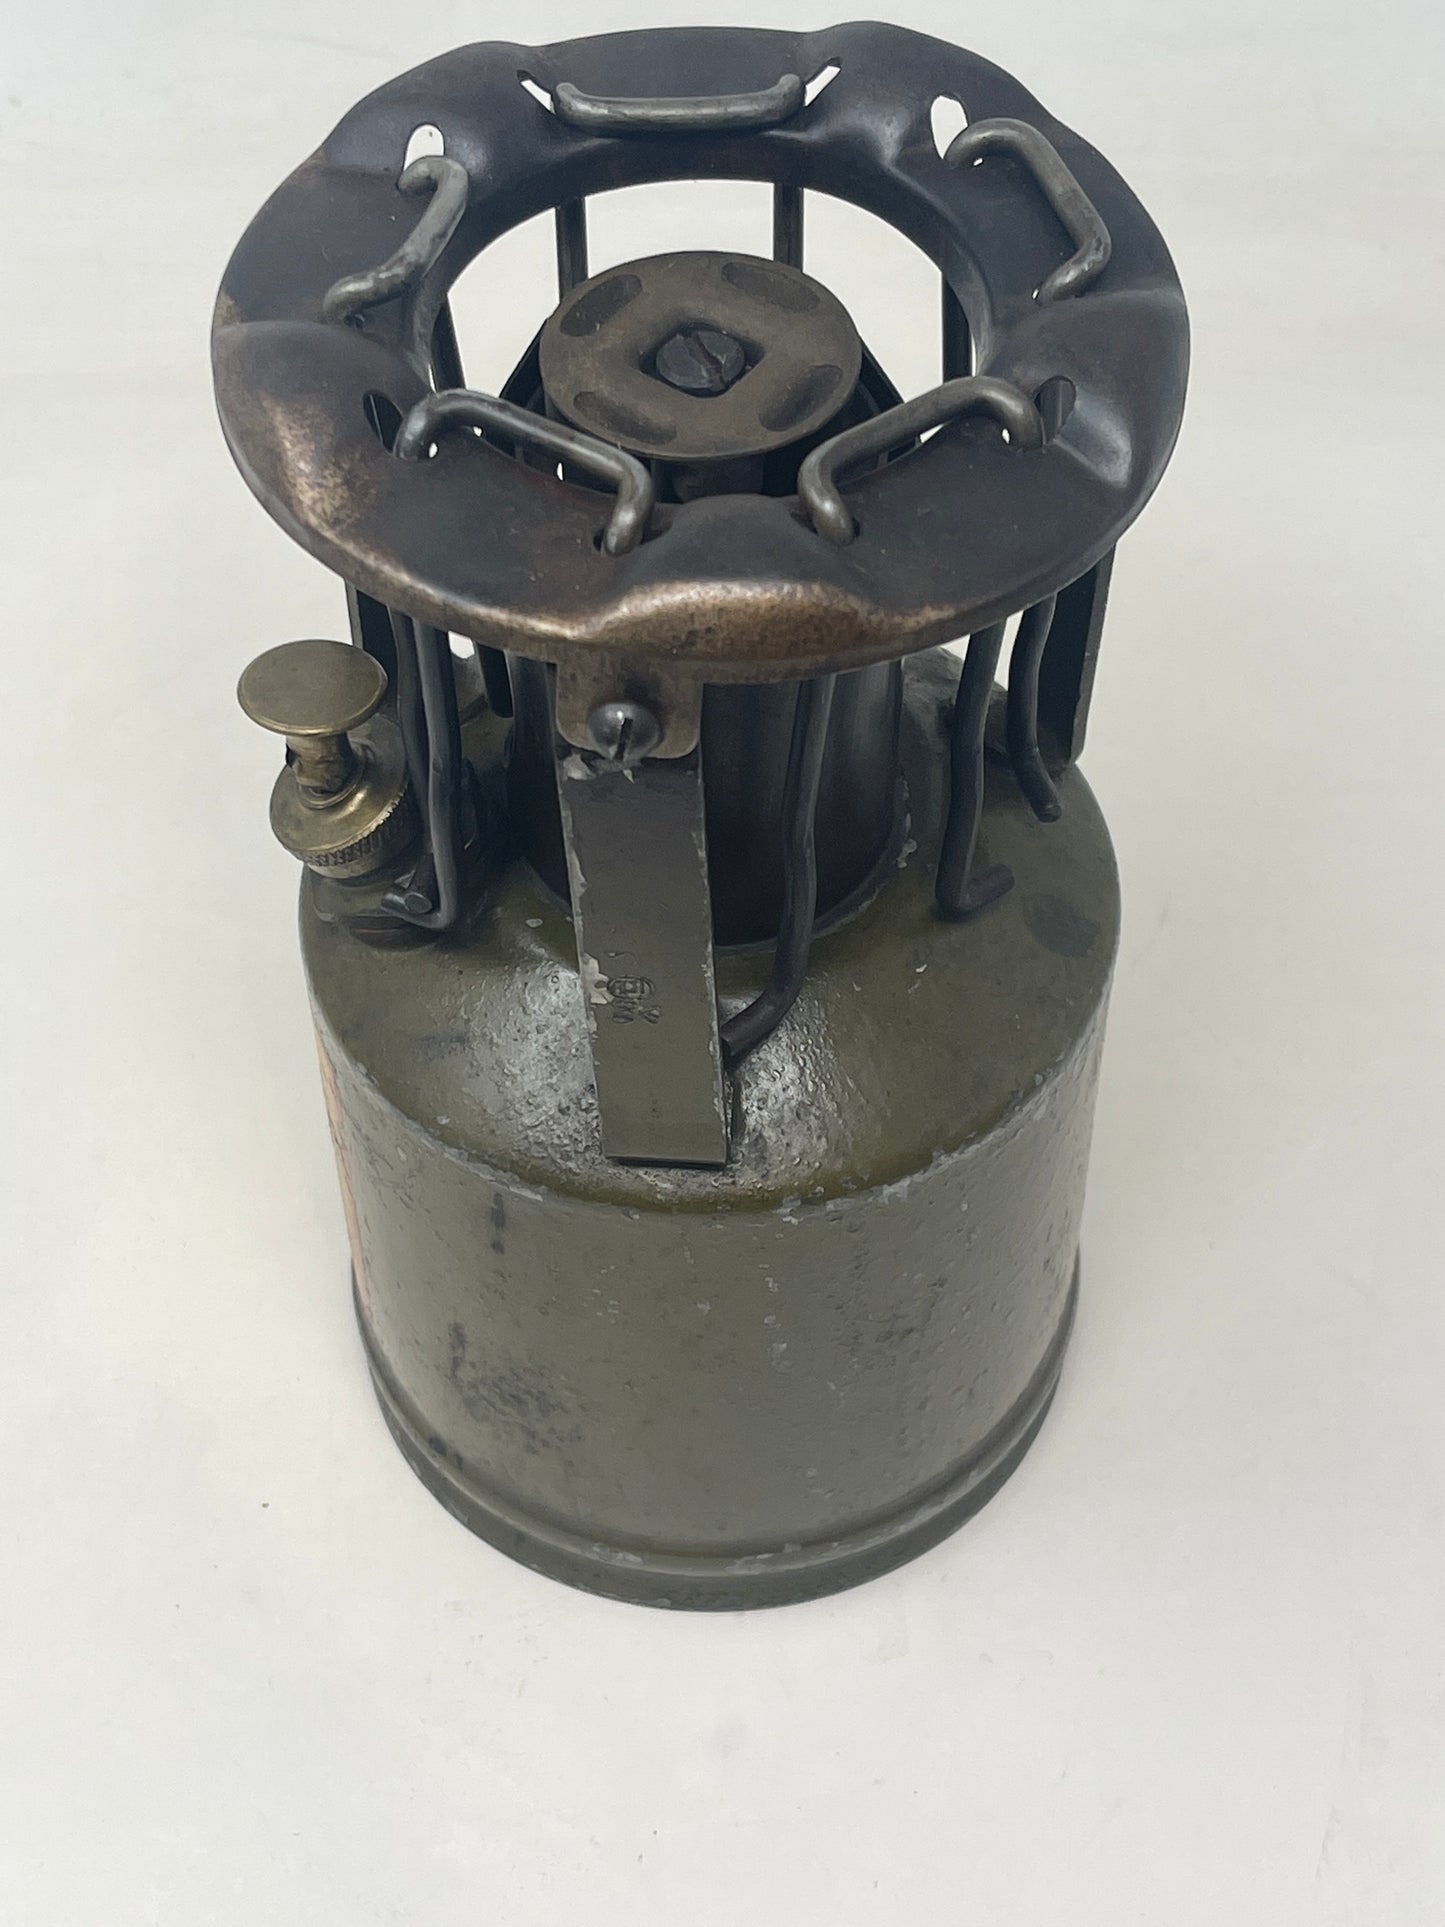 An original WW2 "Hurlock " field cooker legs and pan arms folded